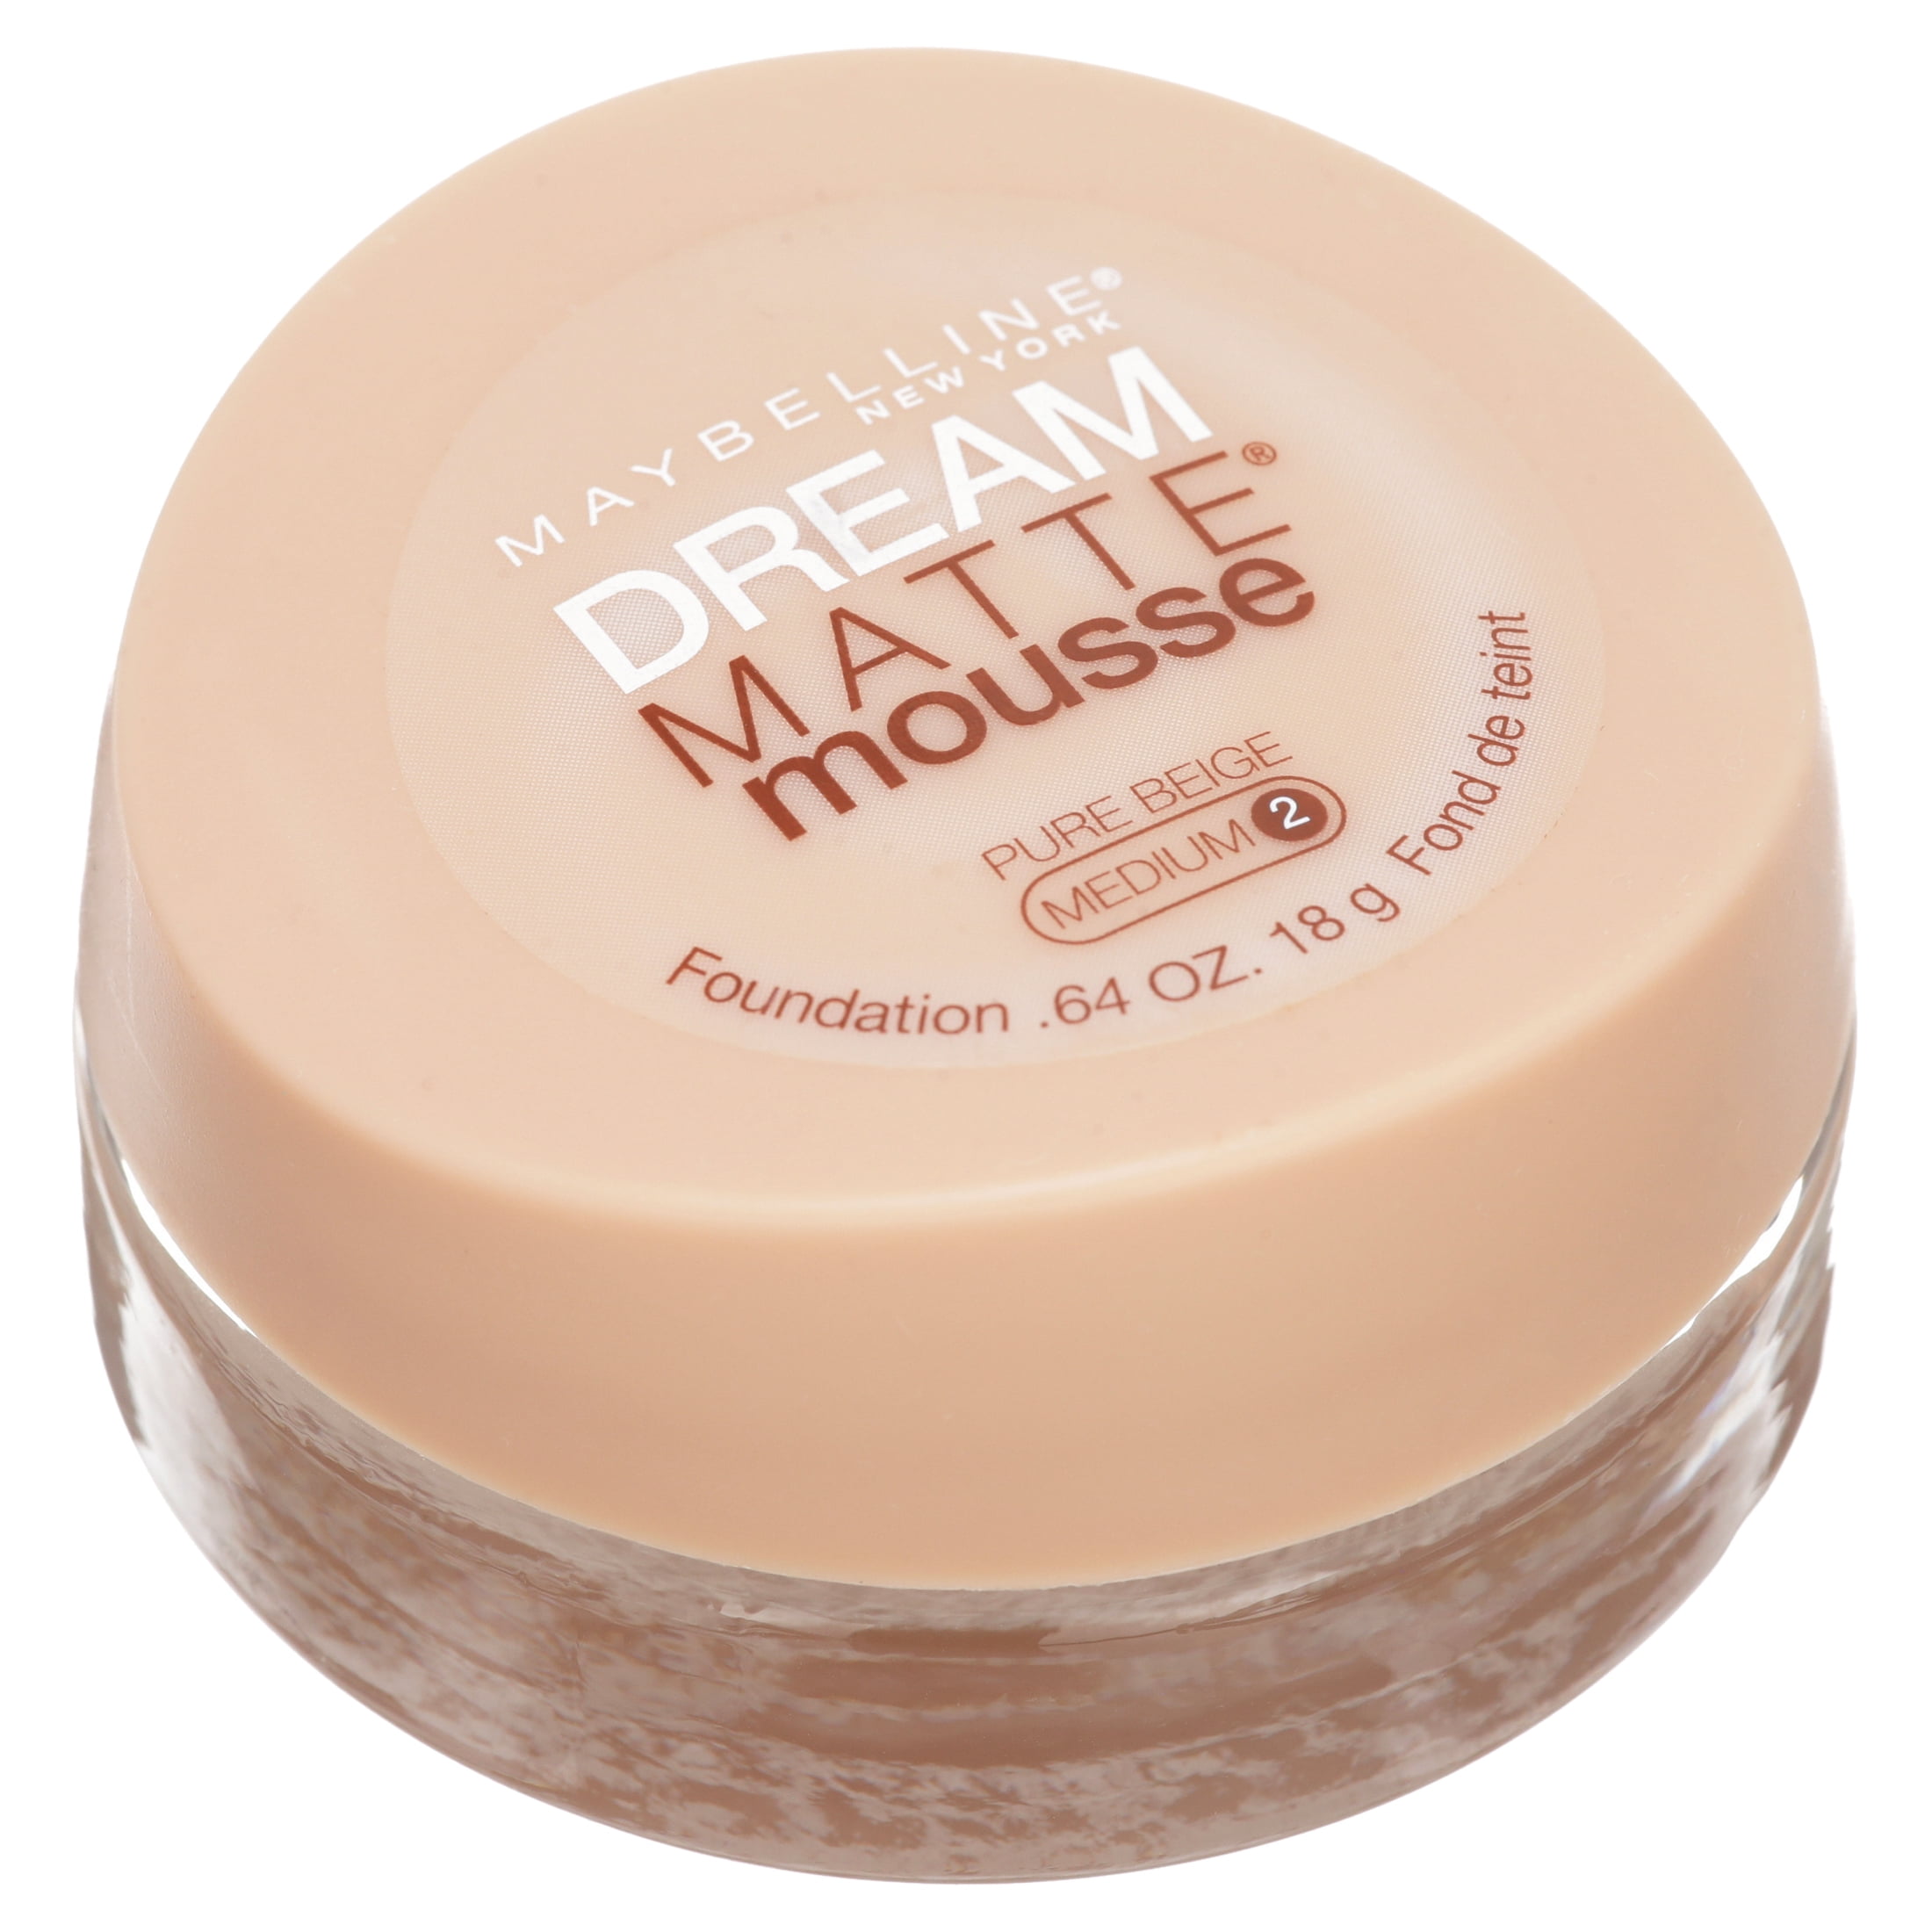 Maybelline New York - Base de maquillaje Dream Matte Mousse, Caramel, Dark  2, 0.64 onzas, el embalaje puede variar